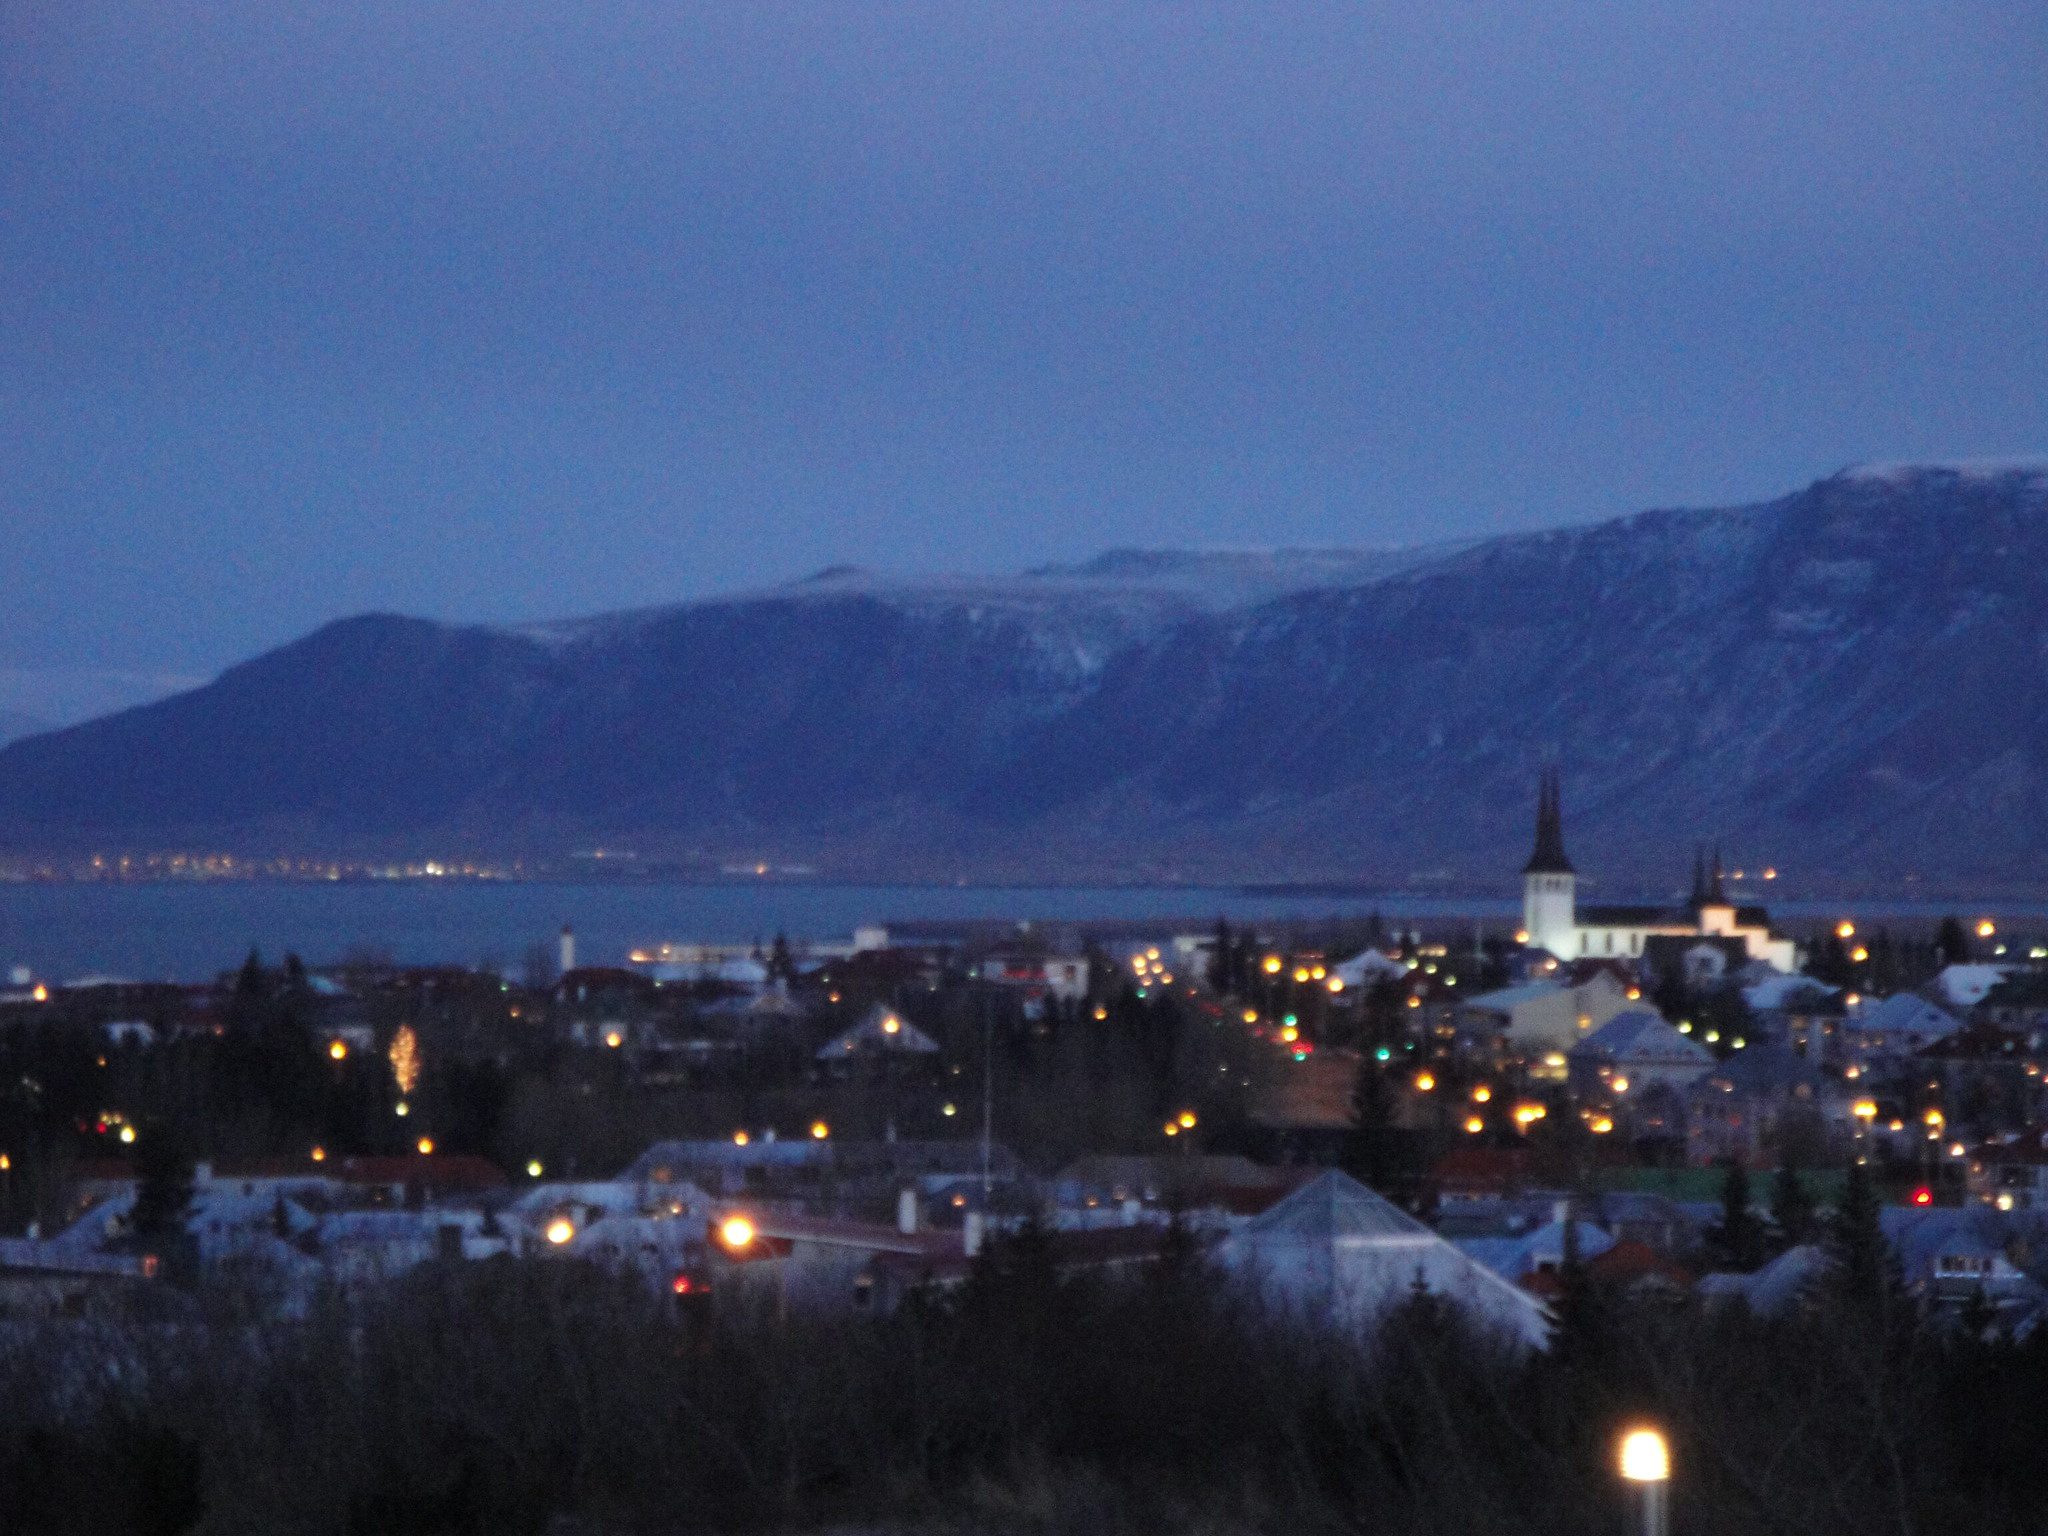 Iceland for Christmas 2010 (Credit: Lisa Stevens/Flickr)